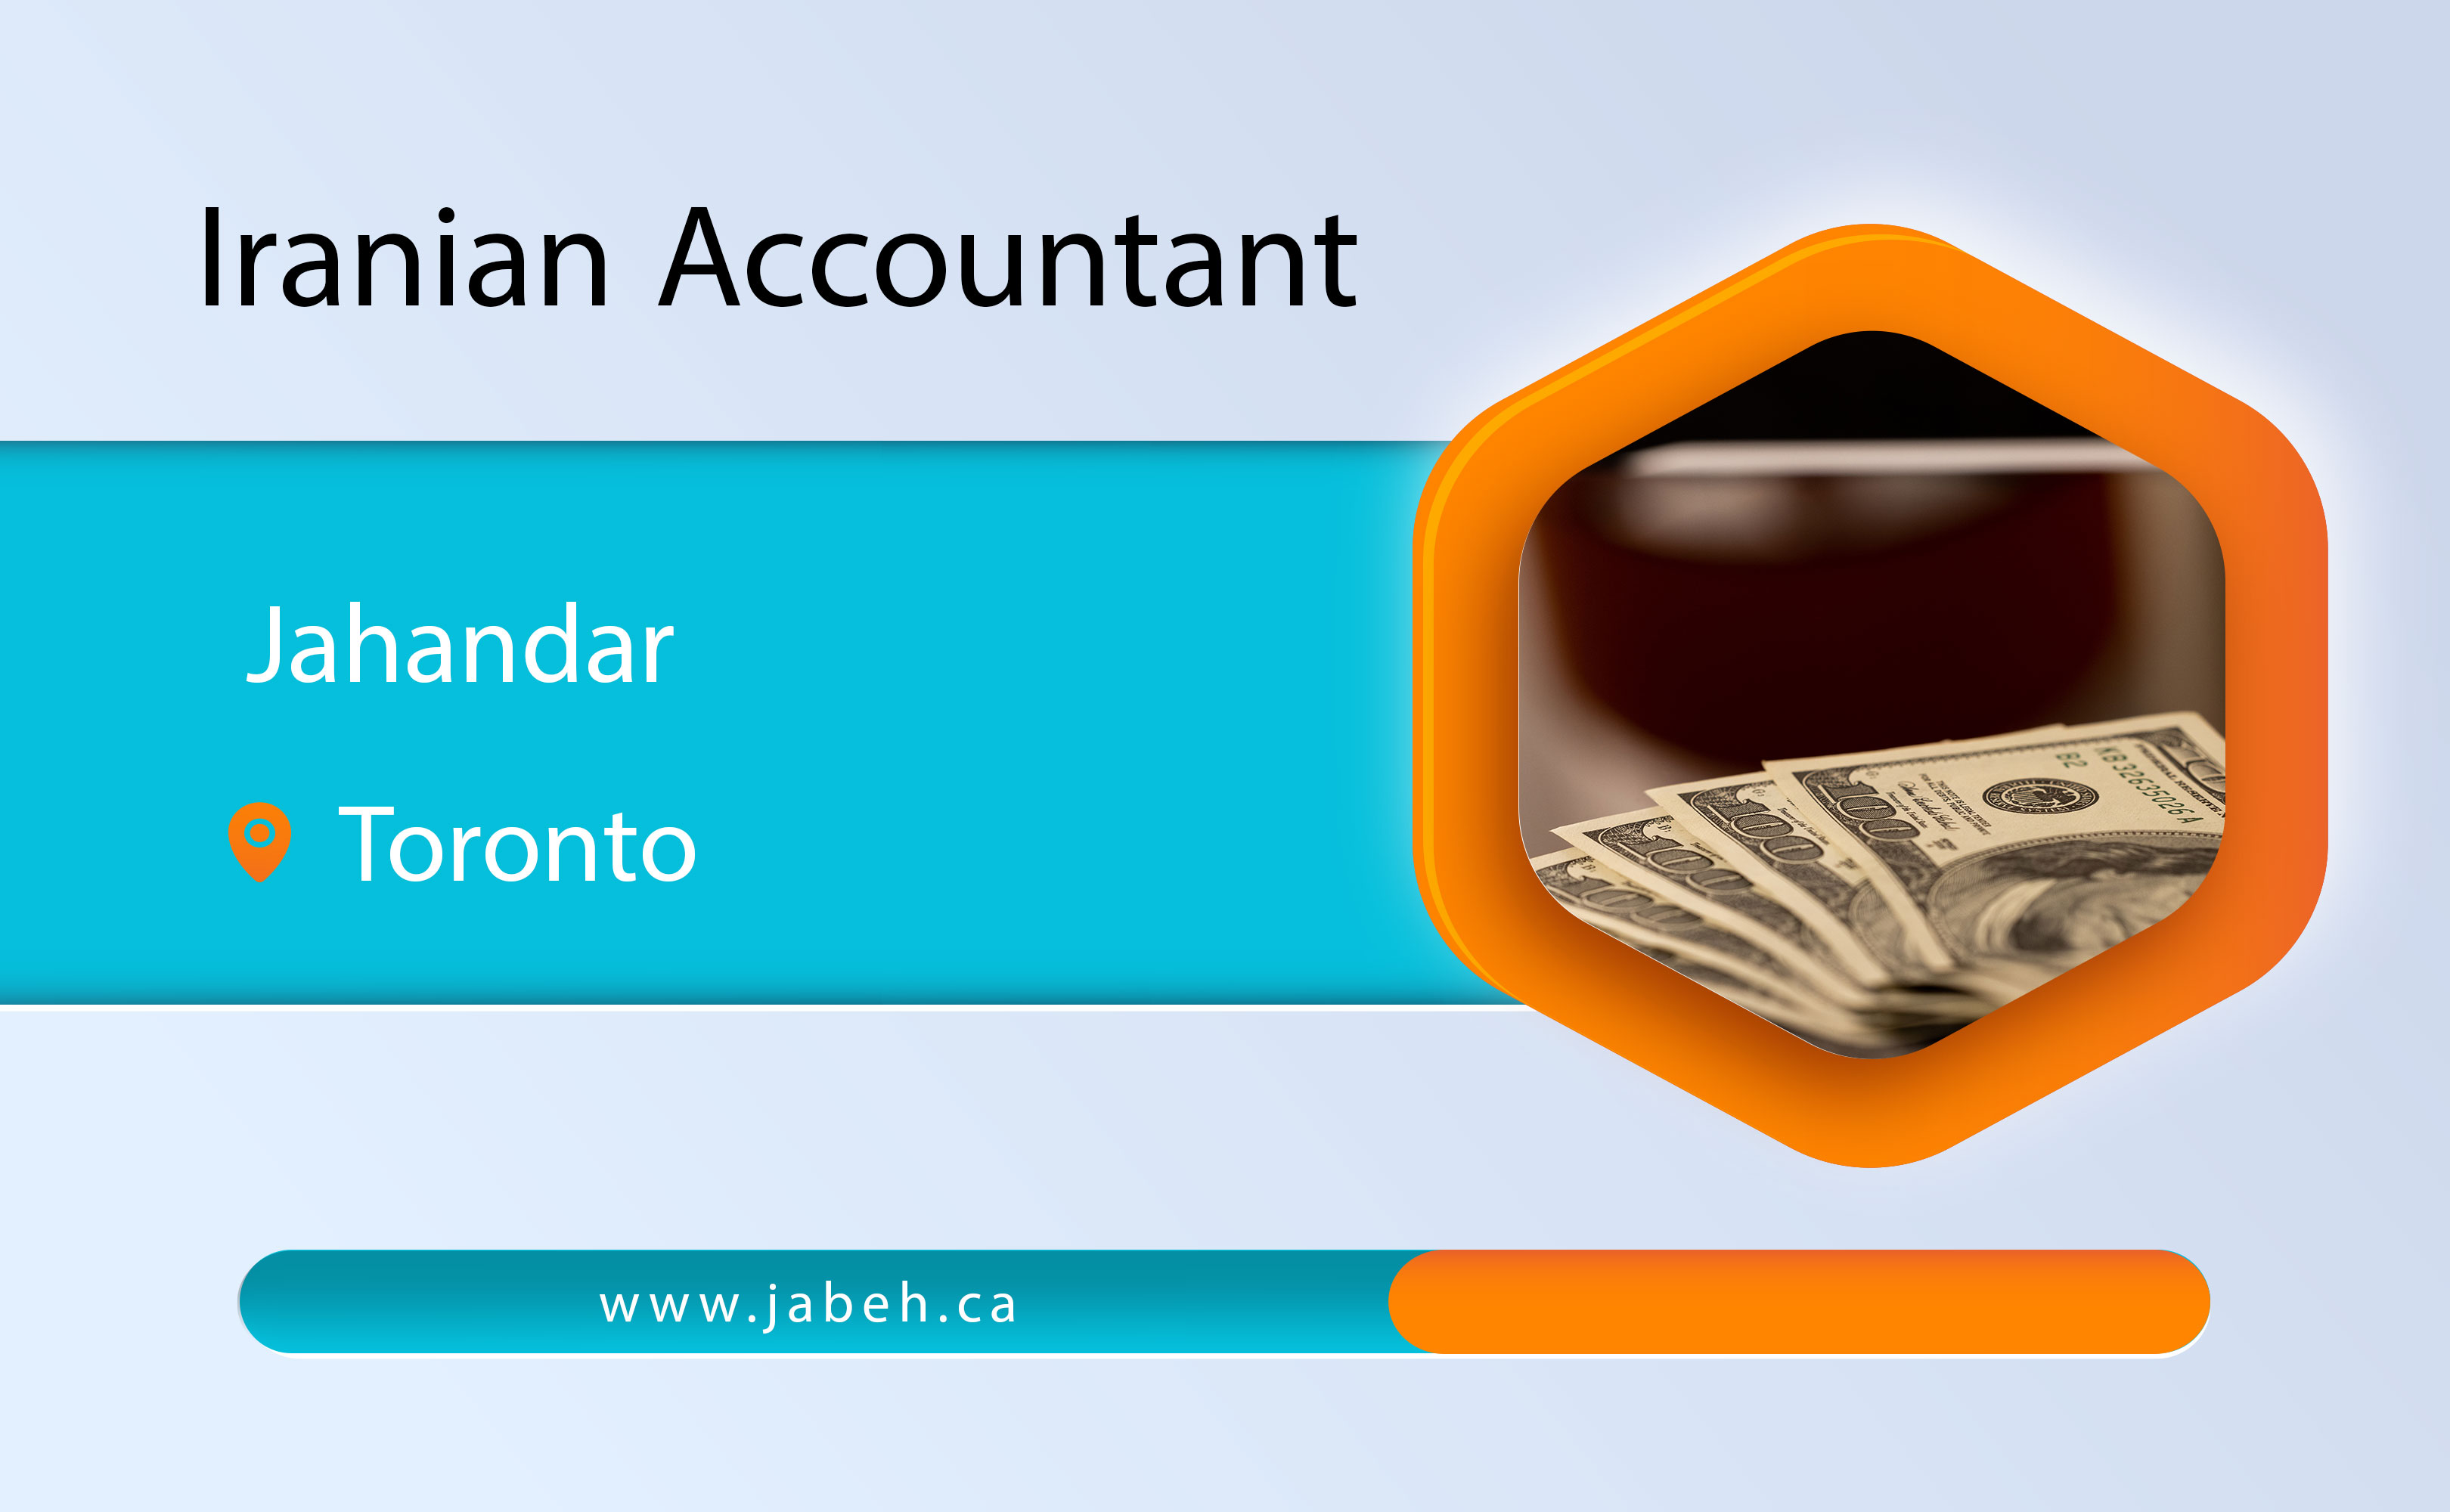 Jahandar Iranian accountant in Toronto